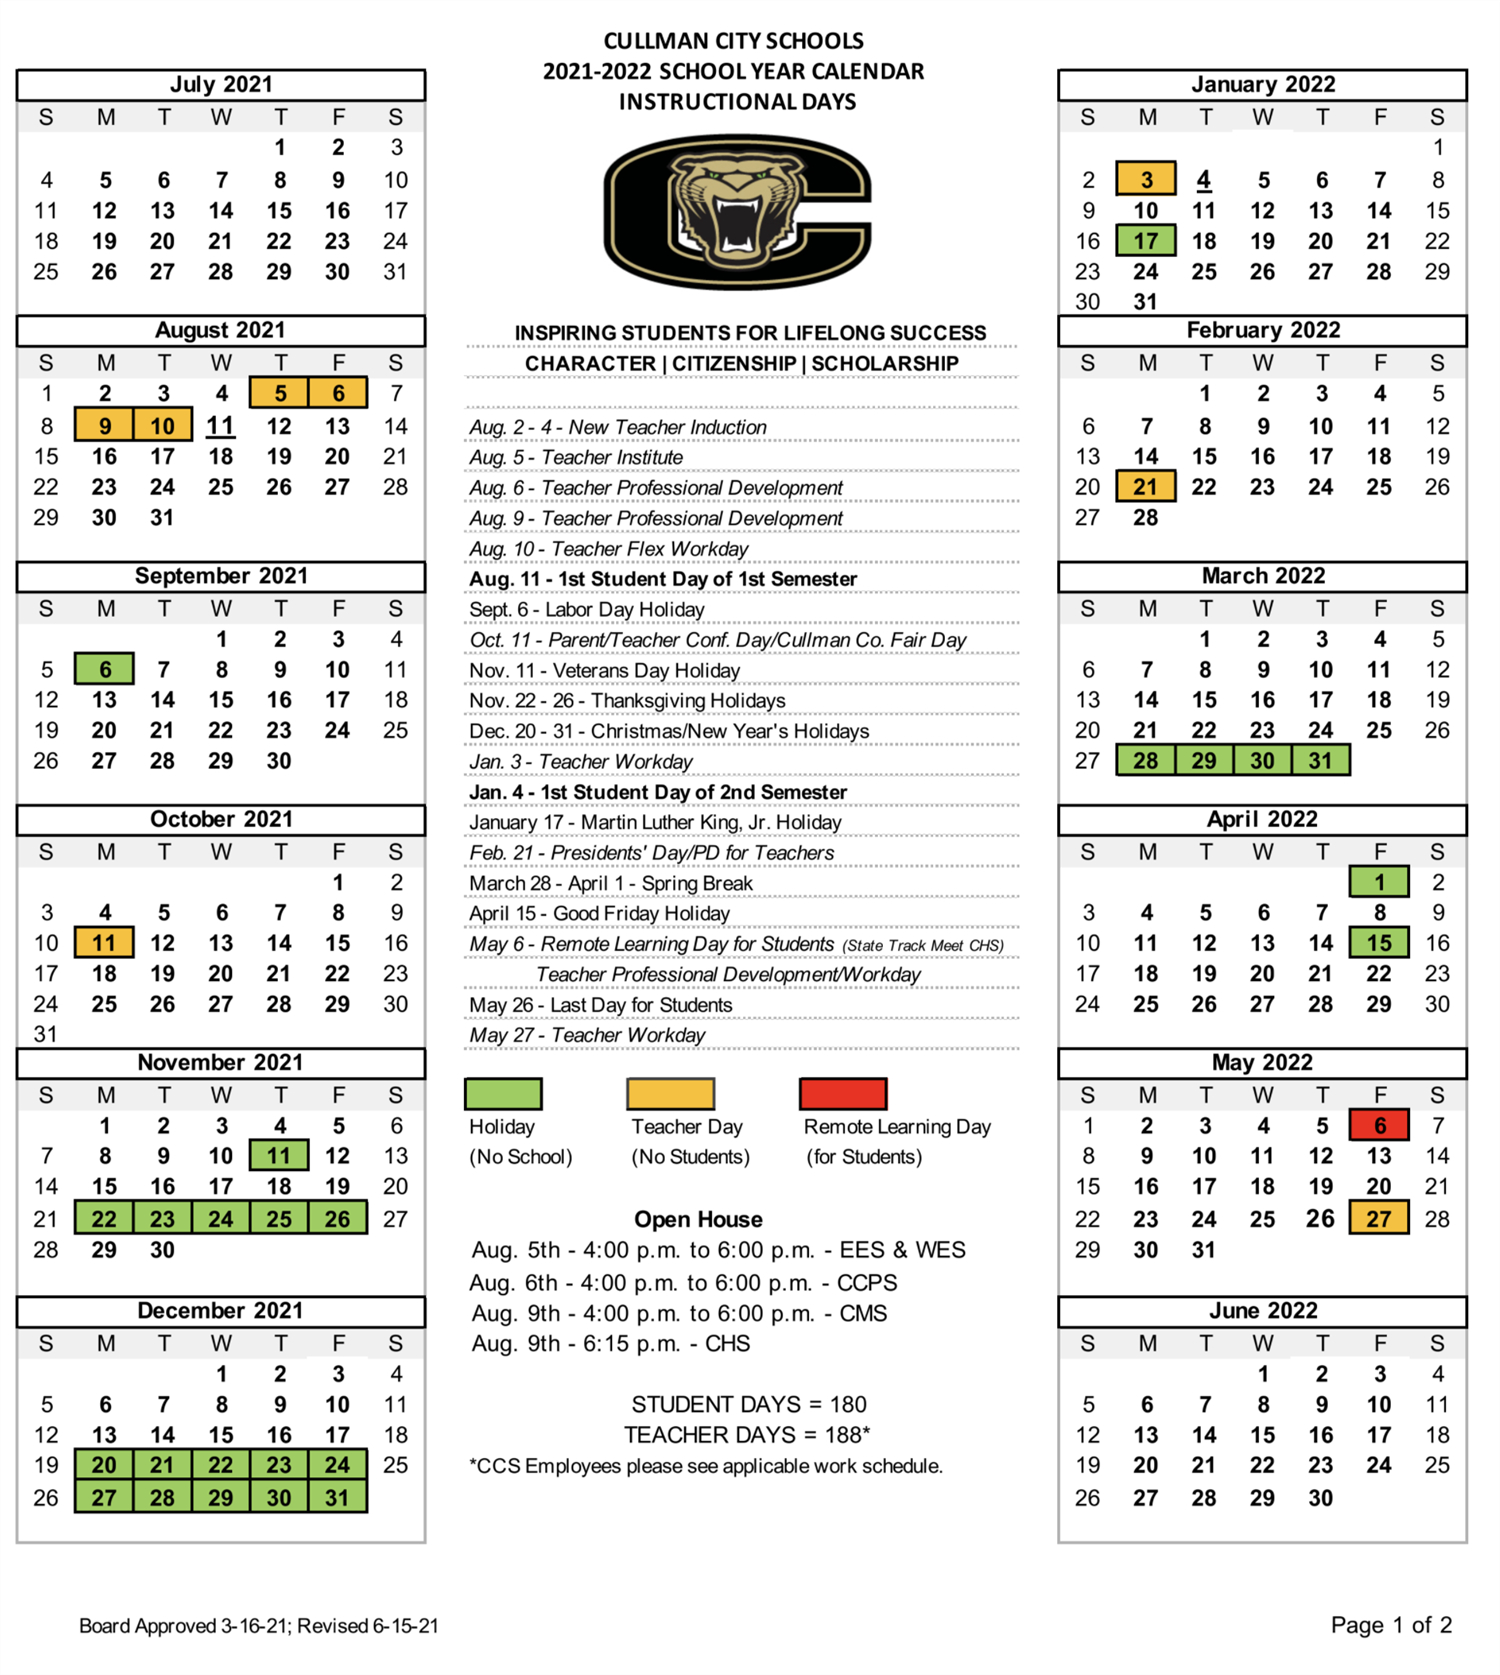 Get March 2022 School Calendar